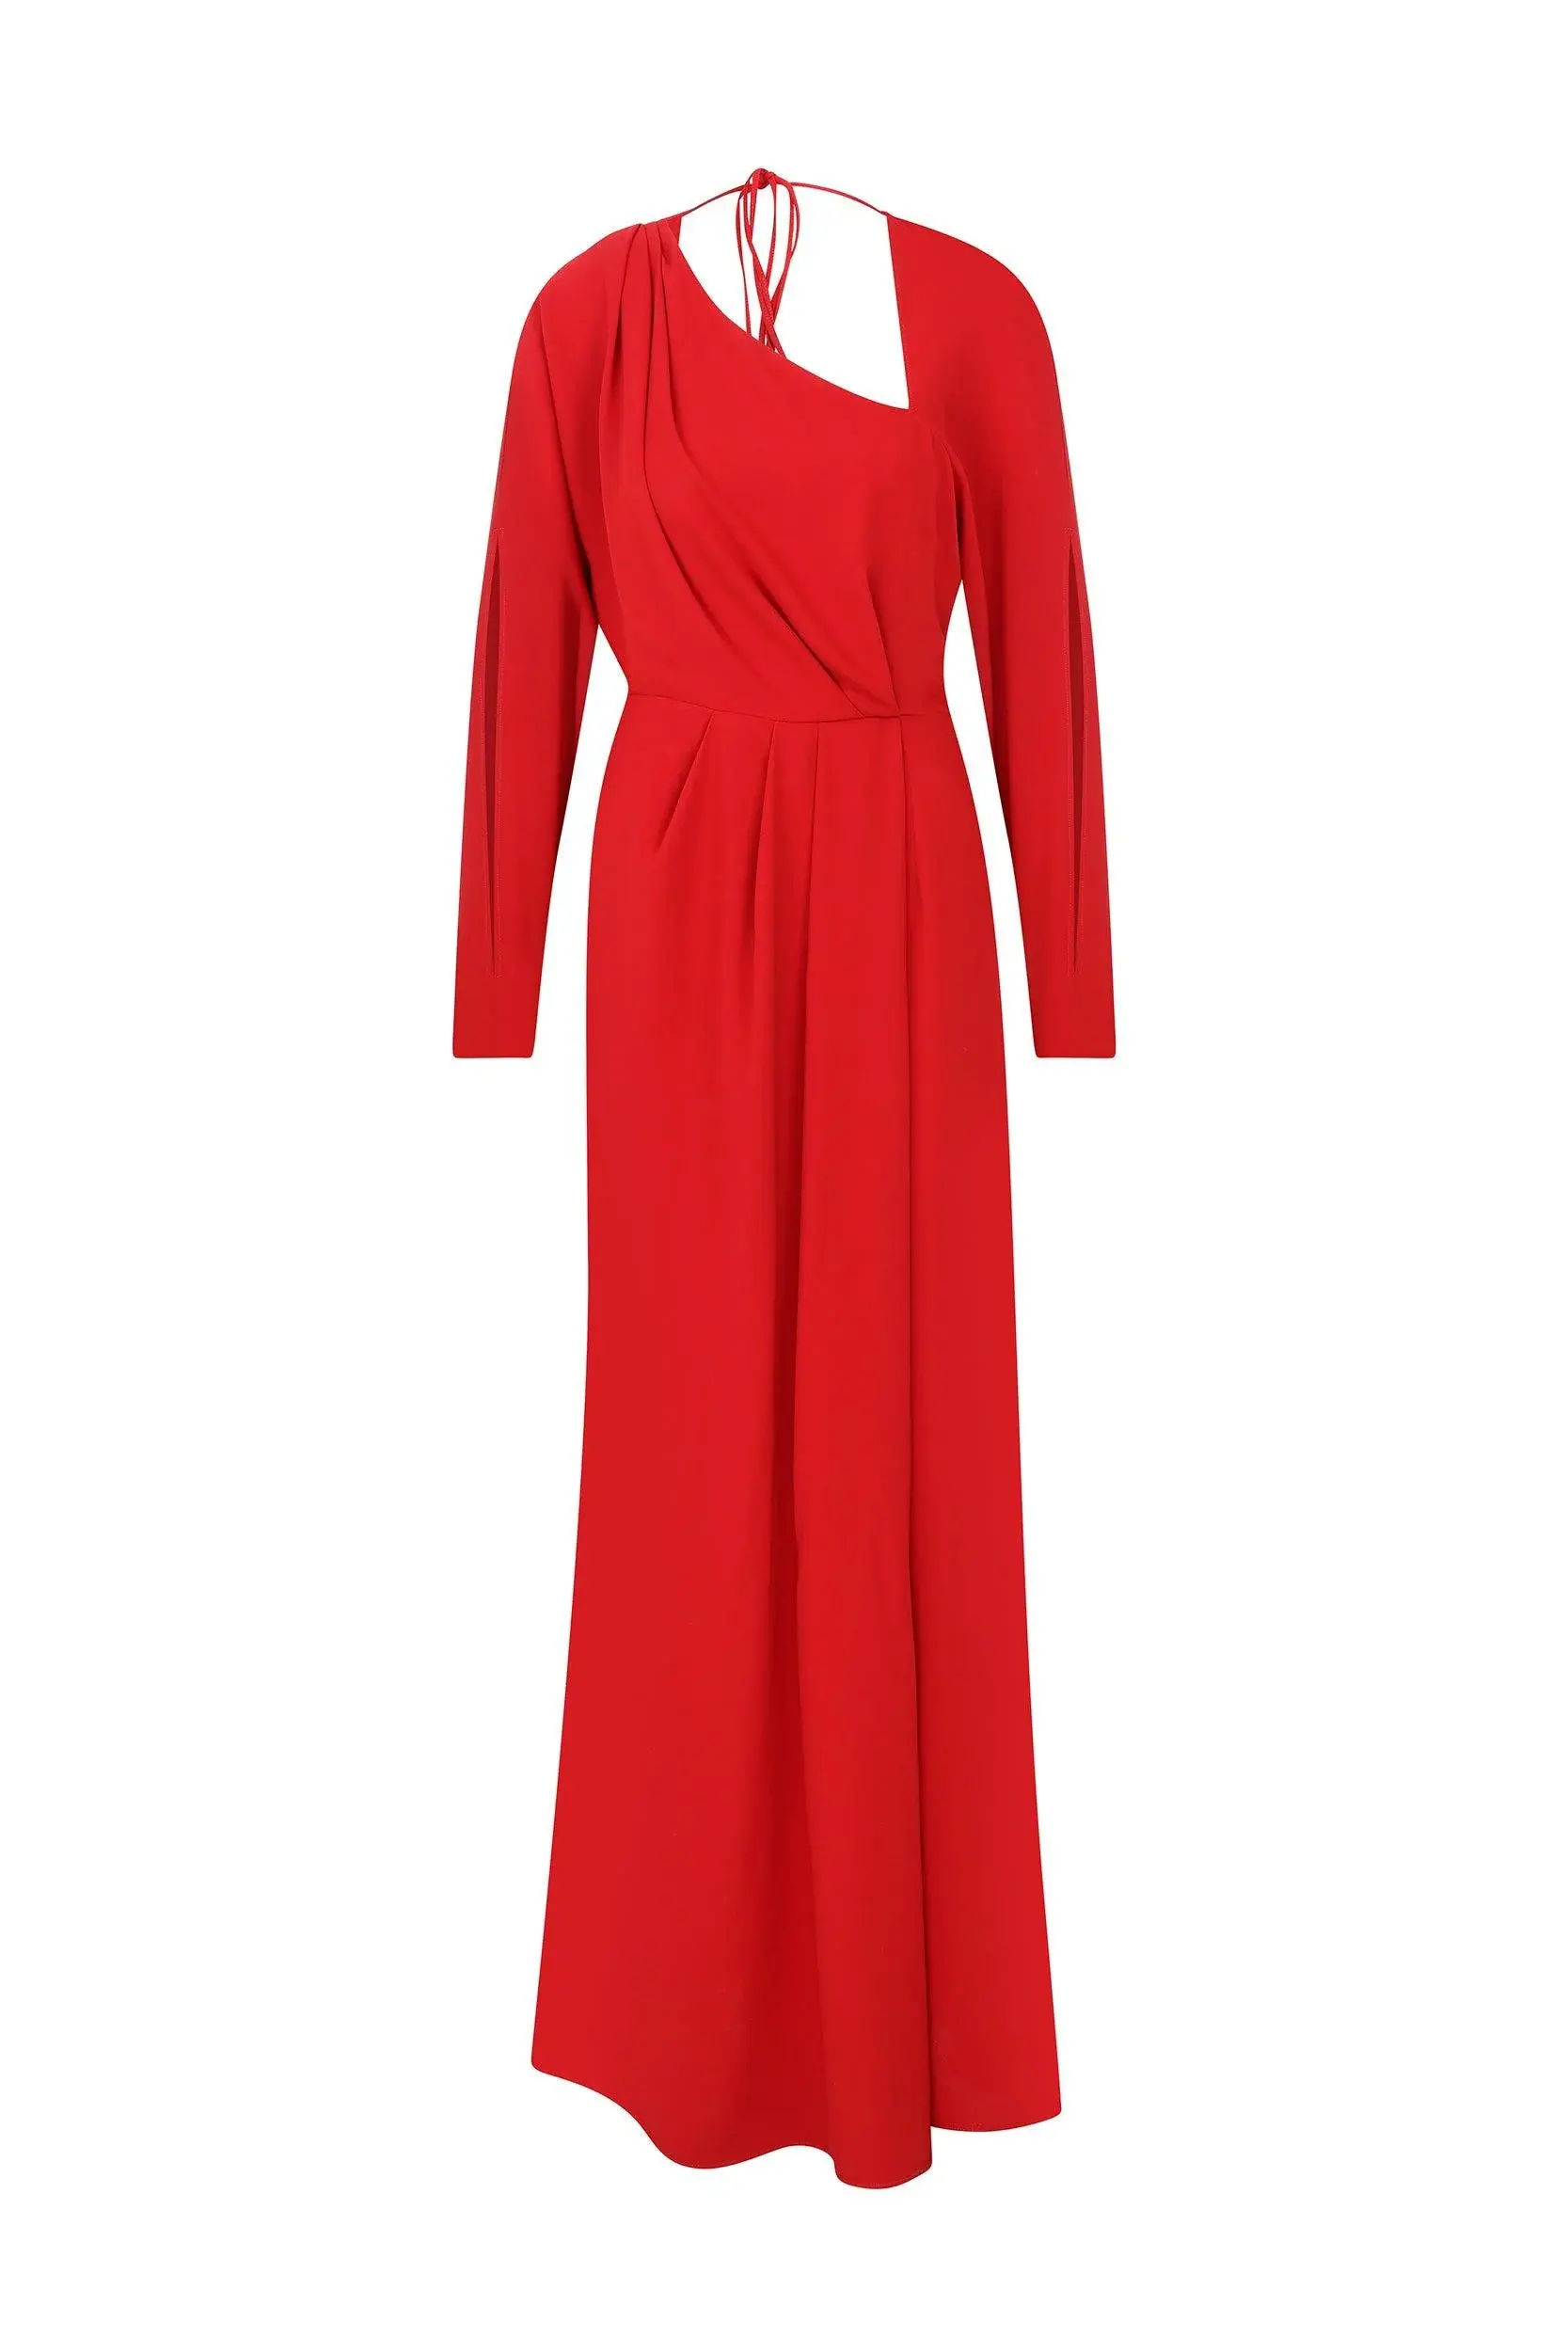 Roman Red Full Sleeve Evening Dress - 4 / Red. 1